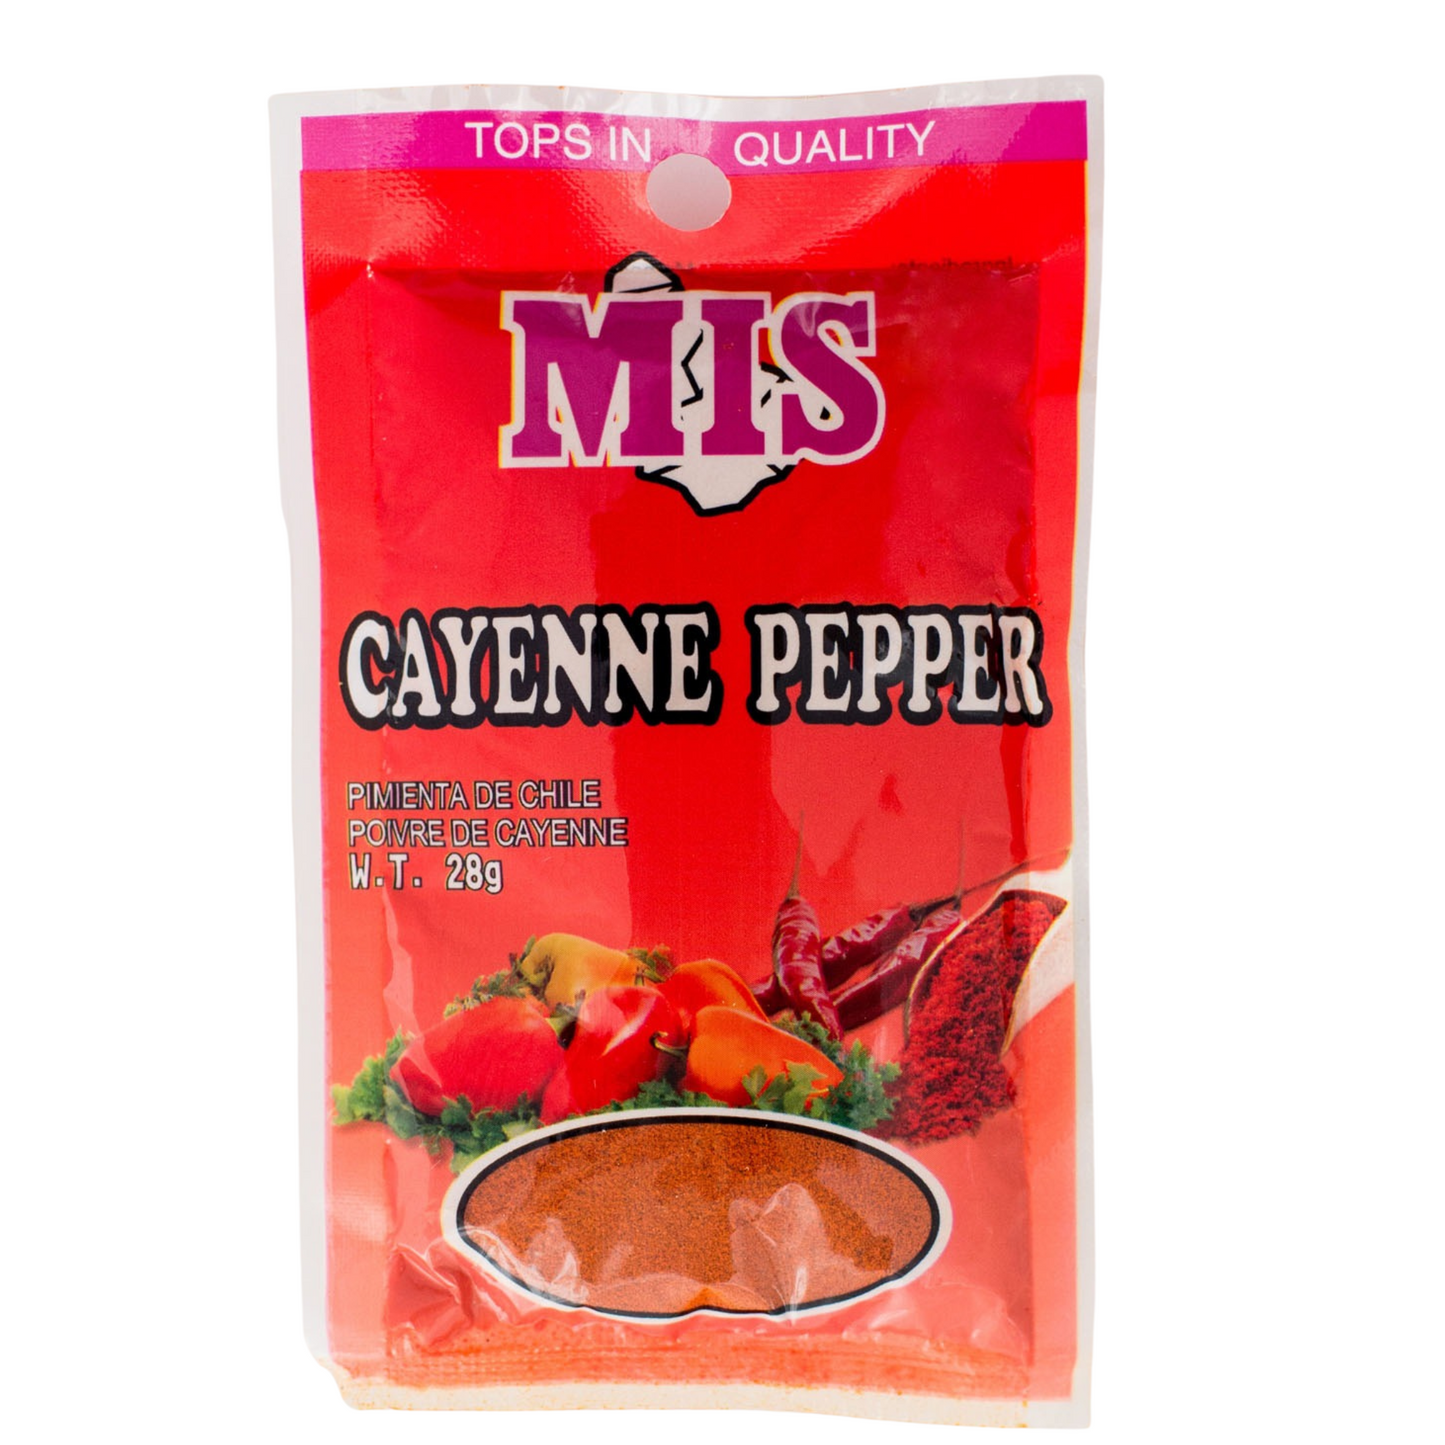 Cayenne Pepper - 28g